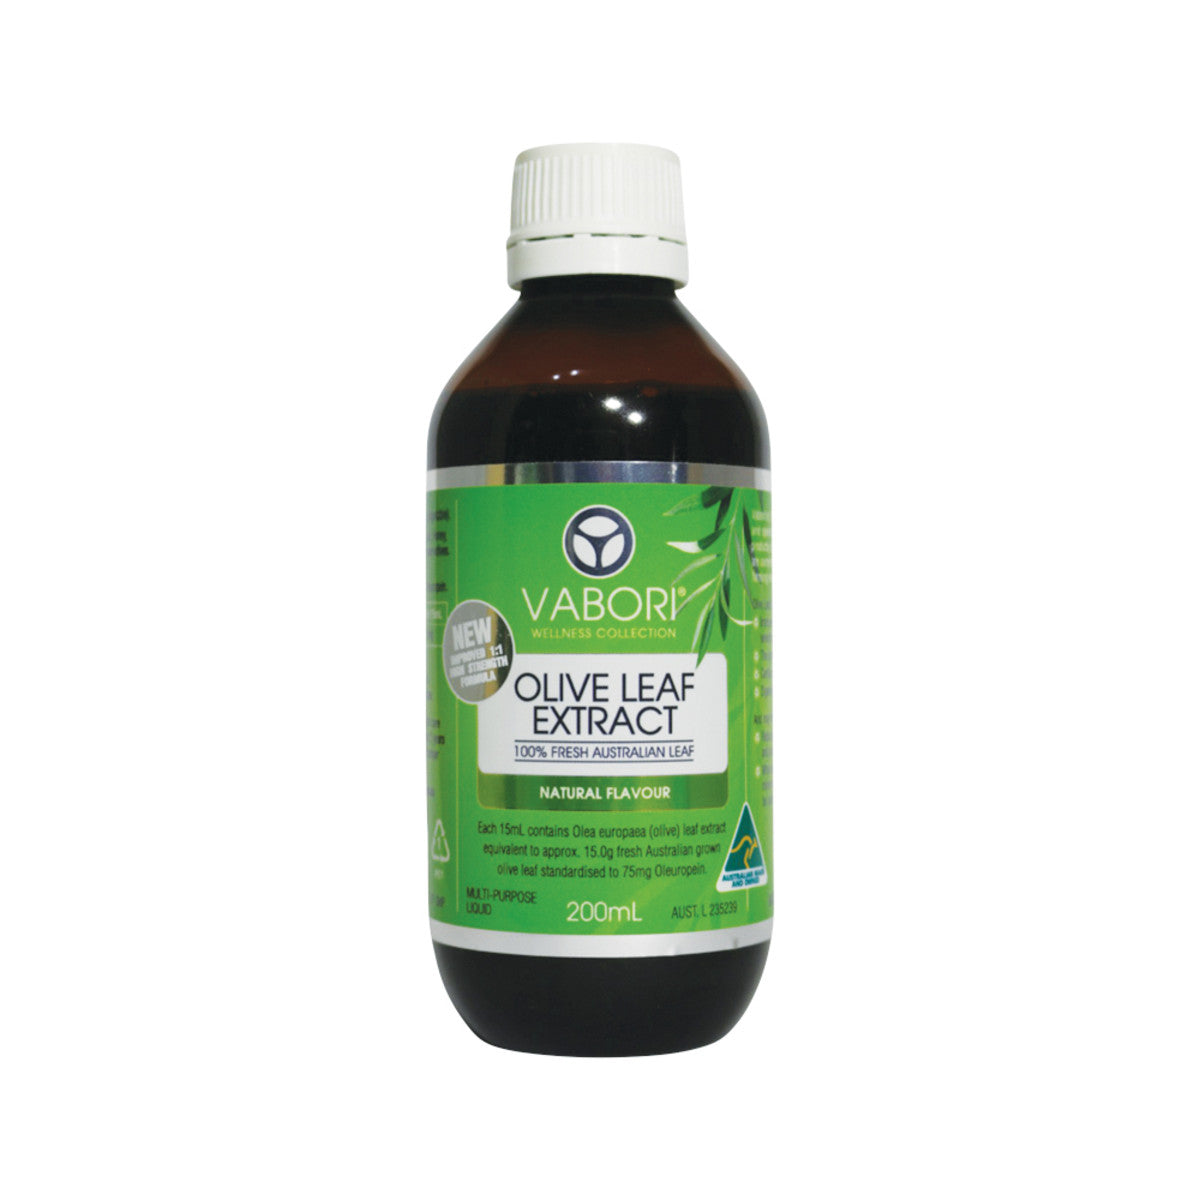 Vabori Olive Leaf Extract Natural 200ml